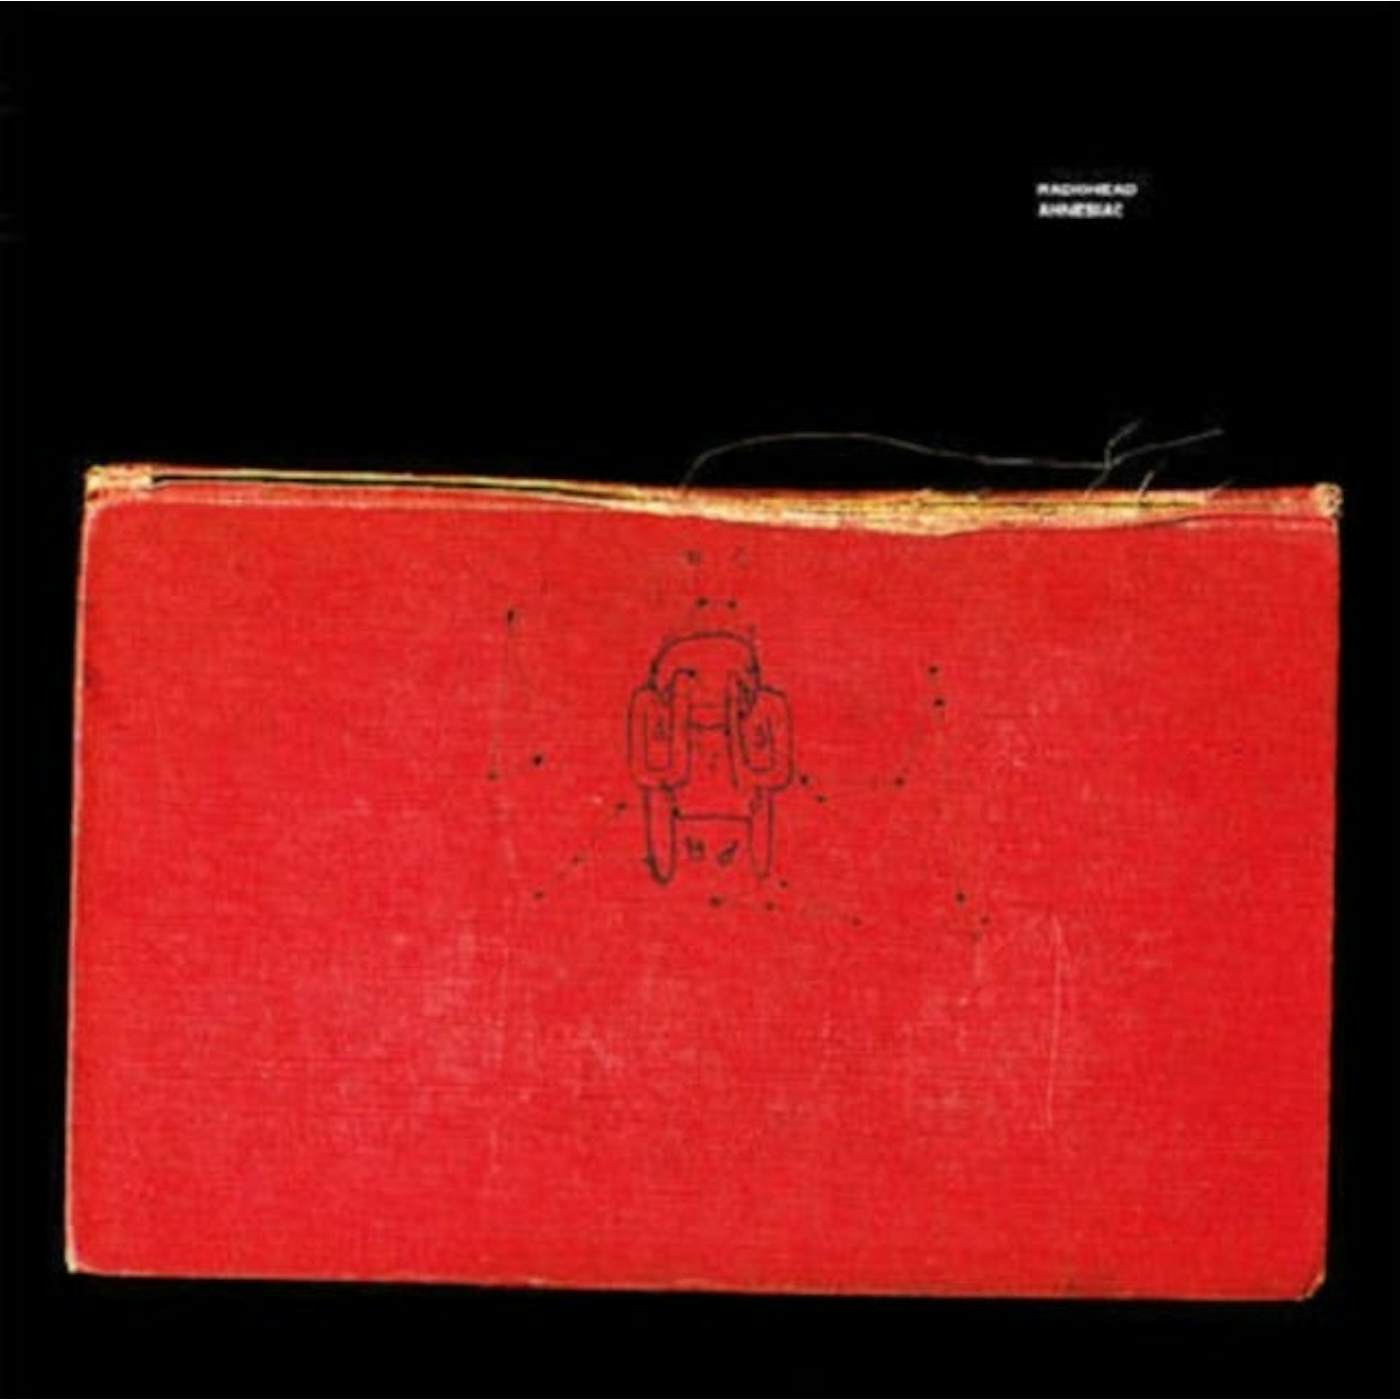 Radiohead LP Vinyl Record - Amnesiac